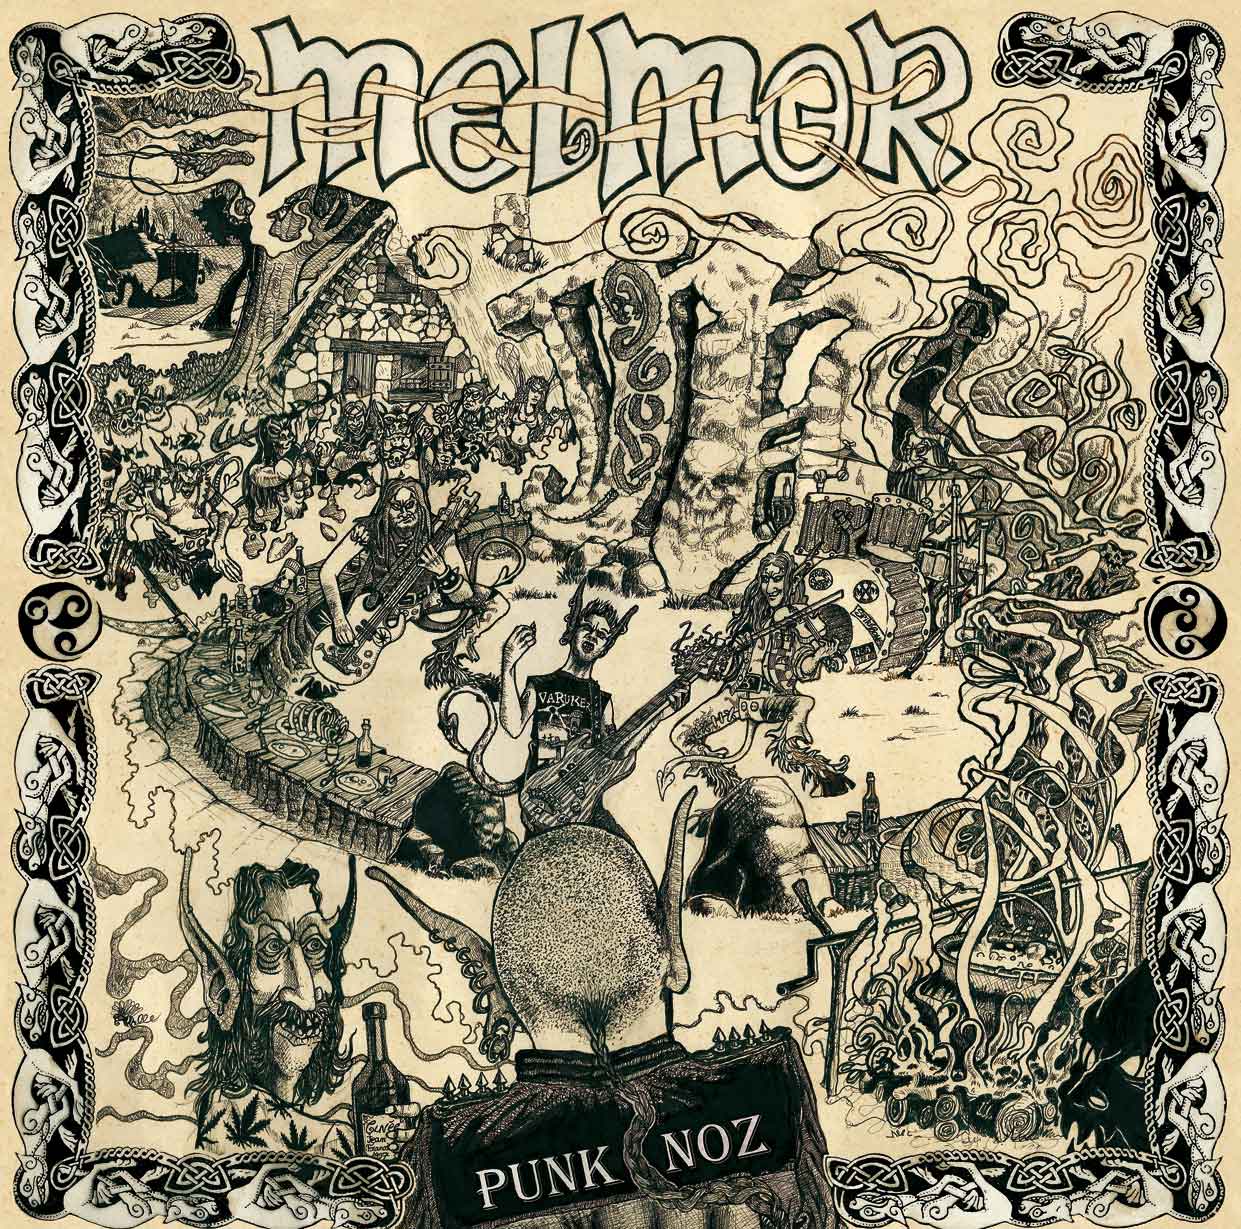 MELMOR "Punk noz" - 33T